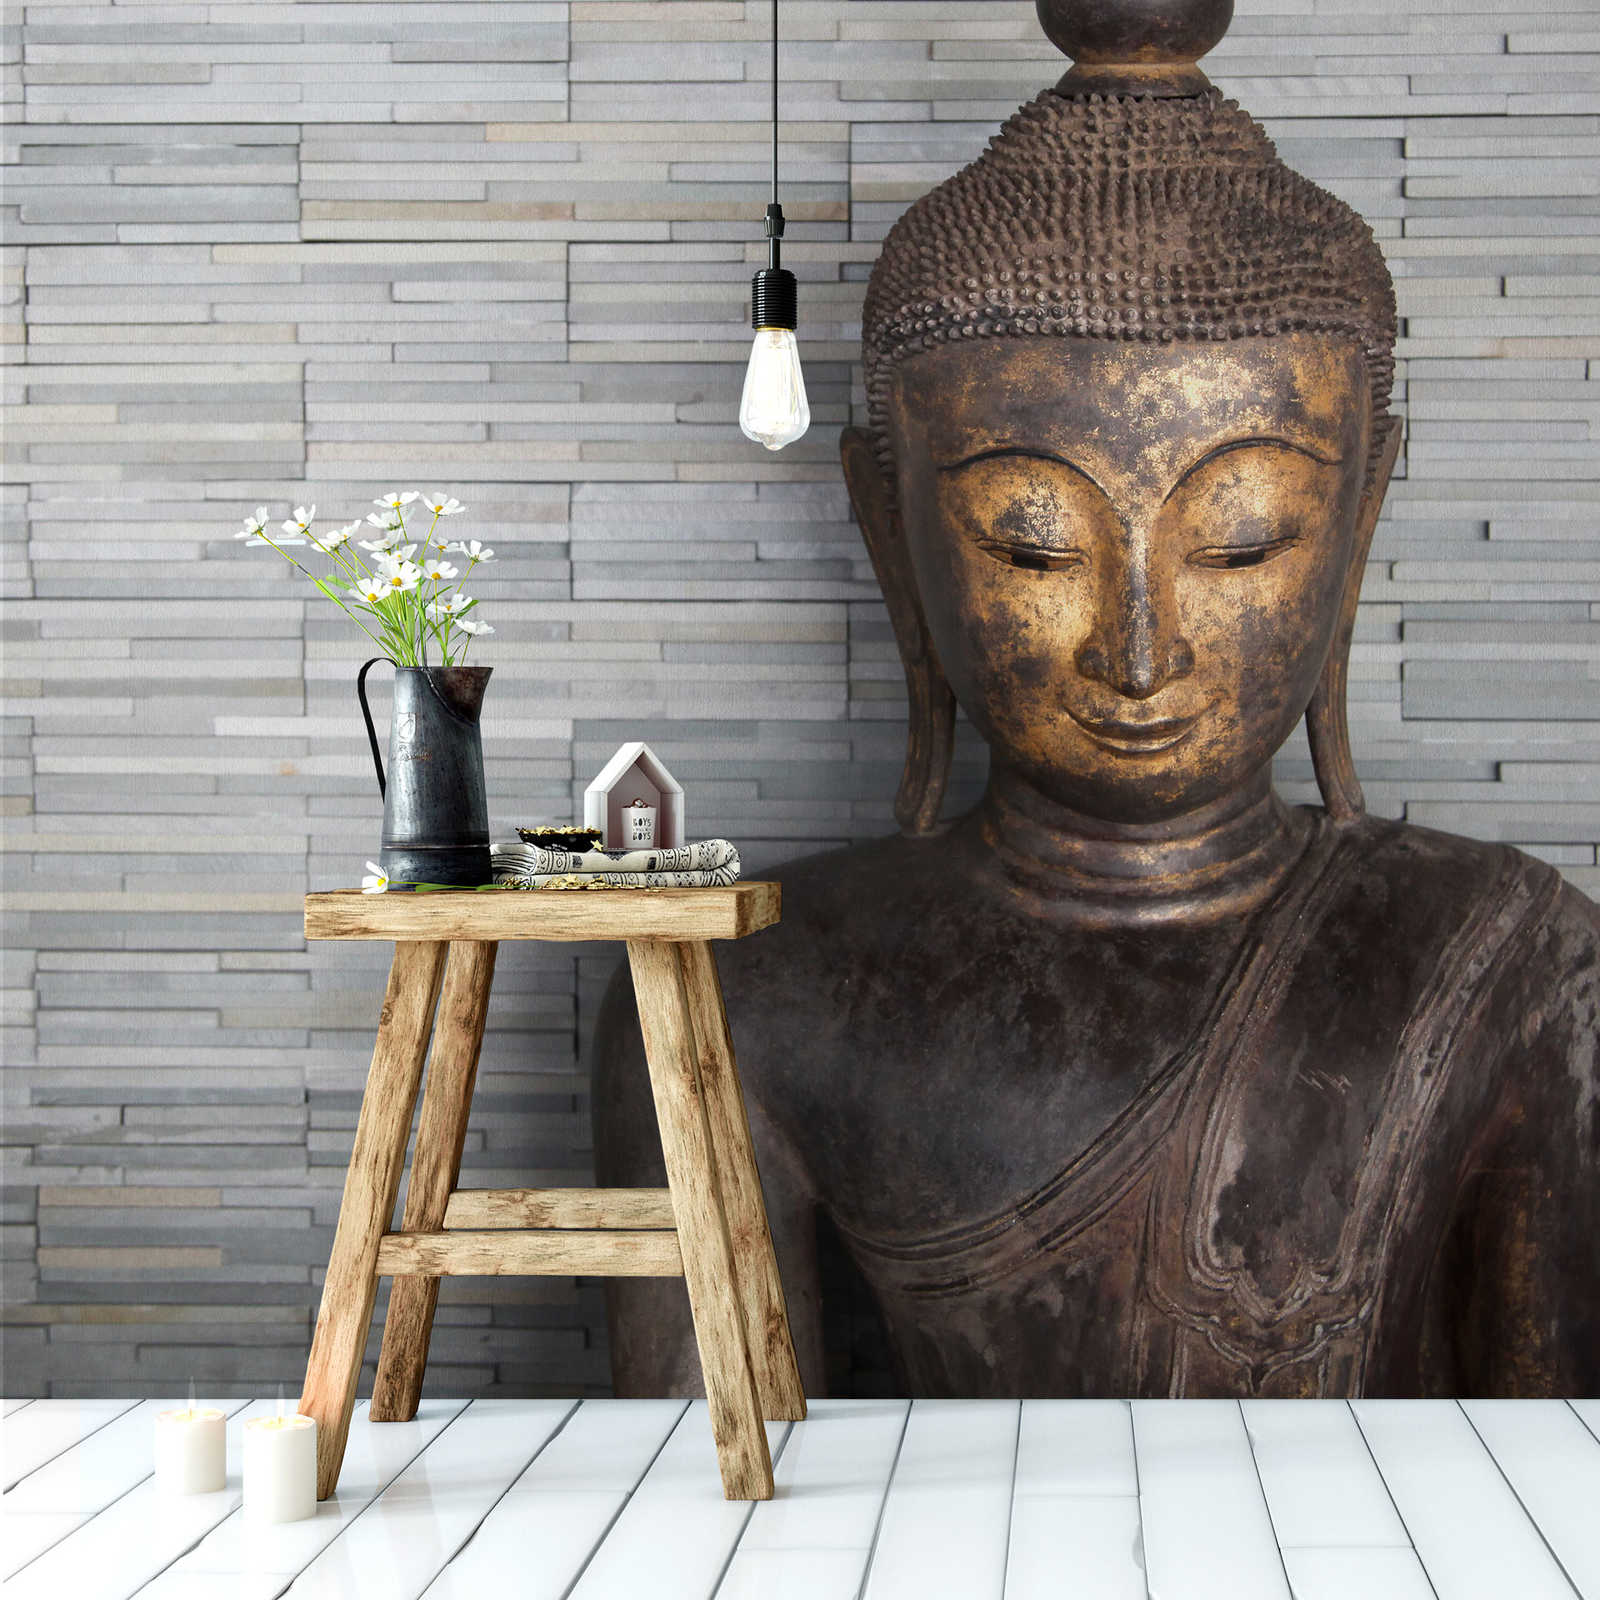             Photo wallpaper Buddha with plain colours
        